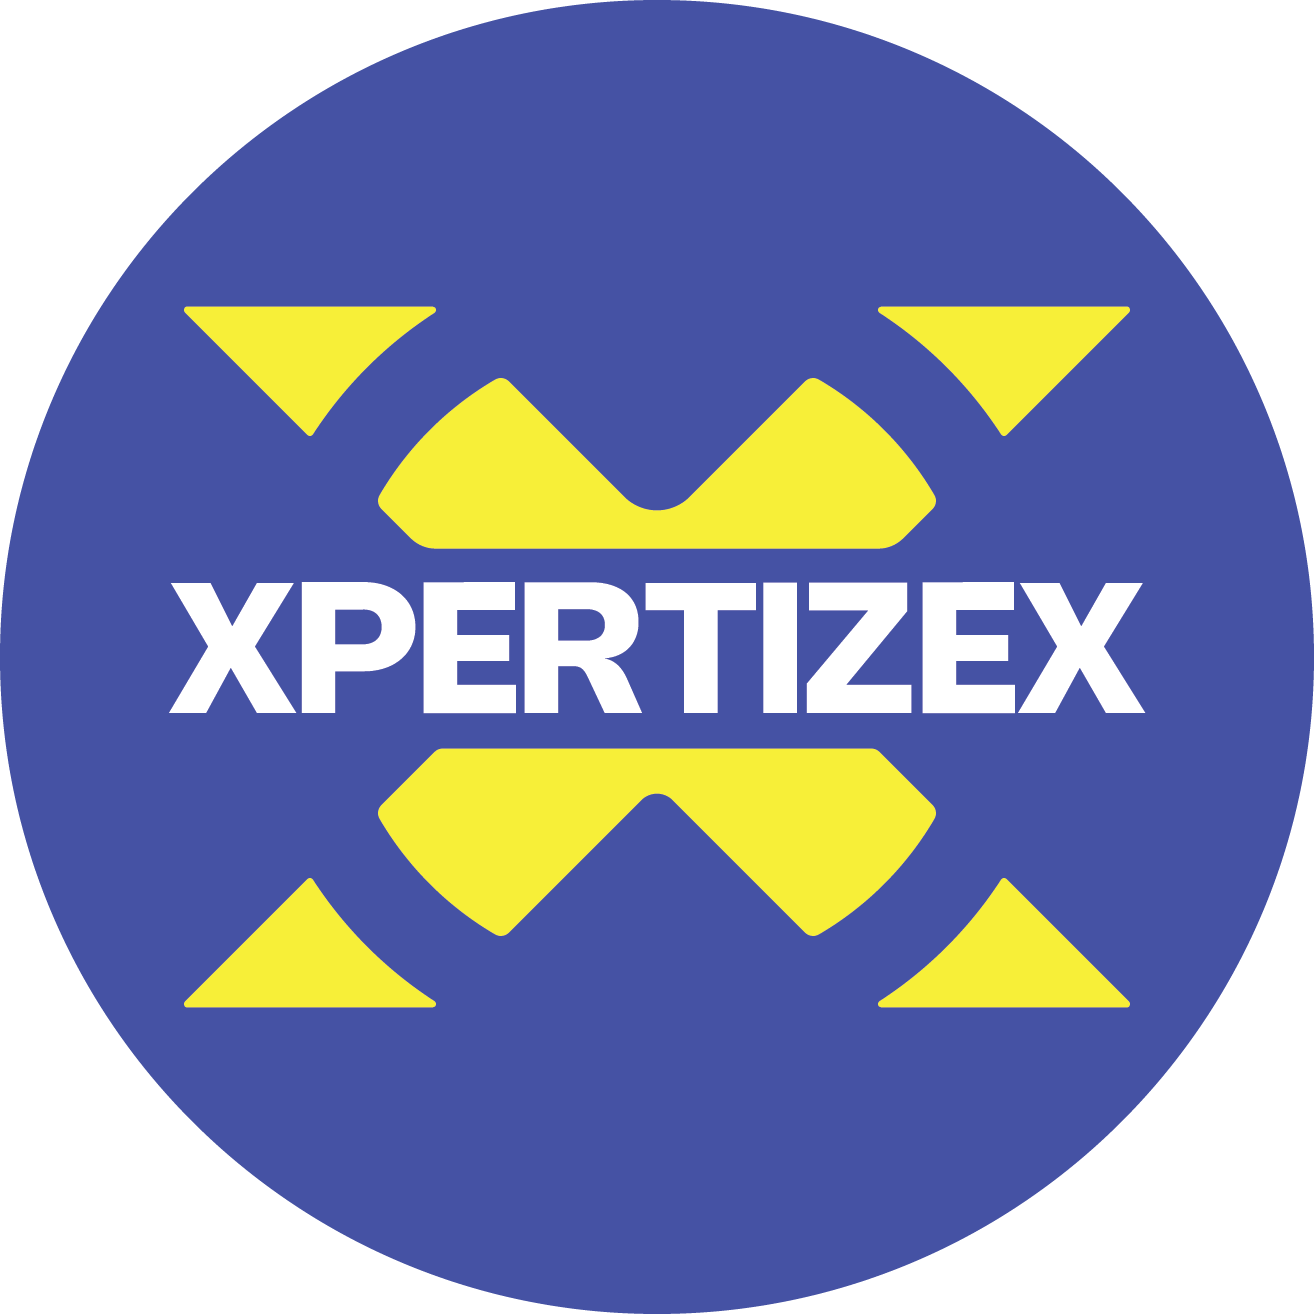 Xpertizex